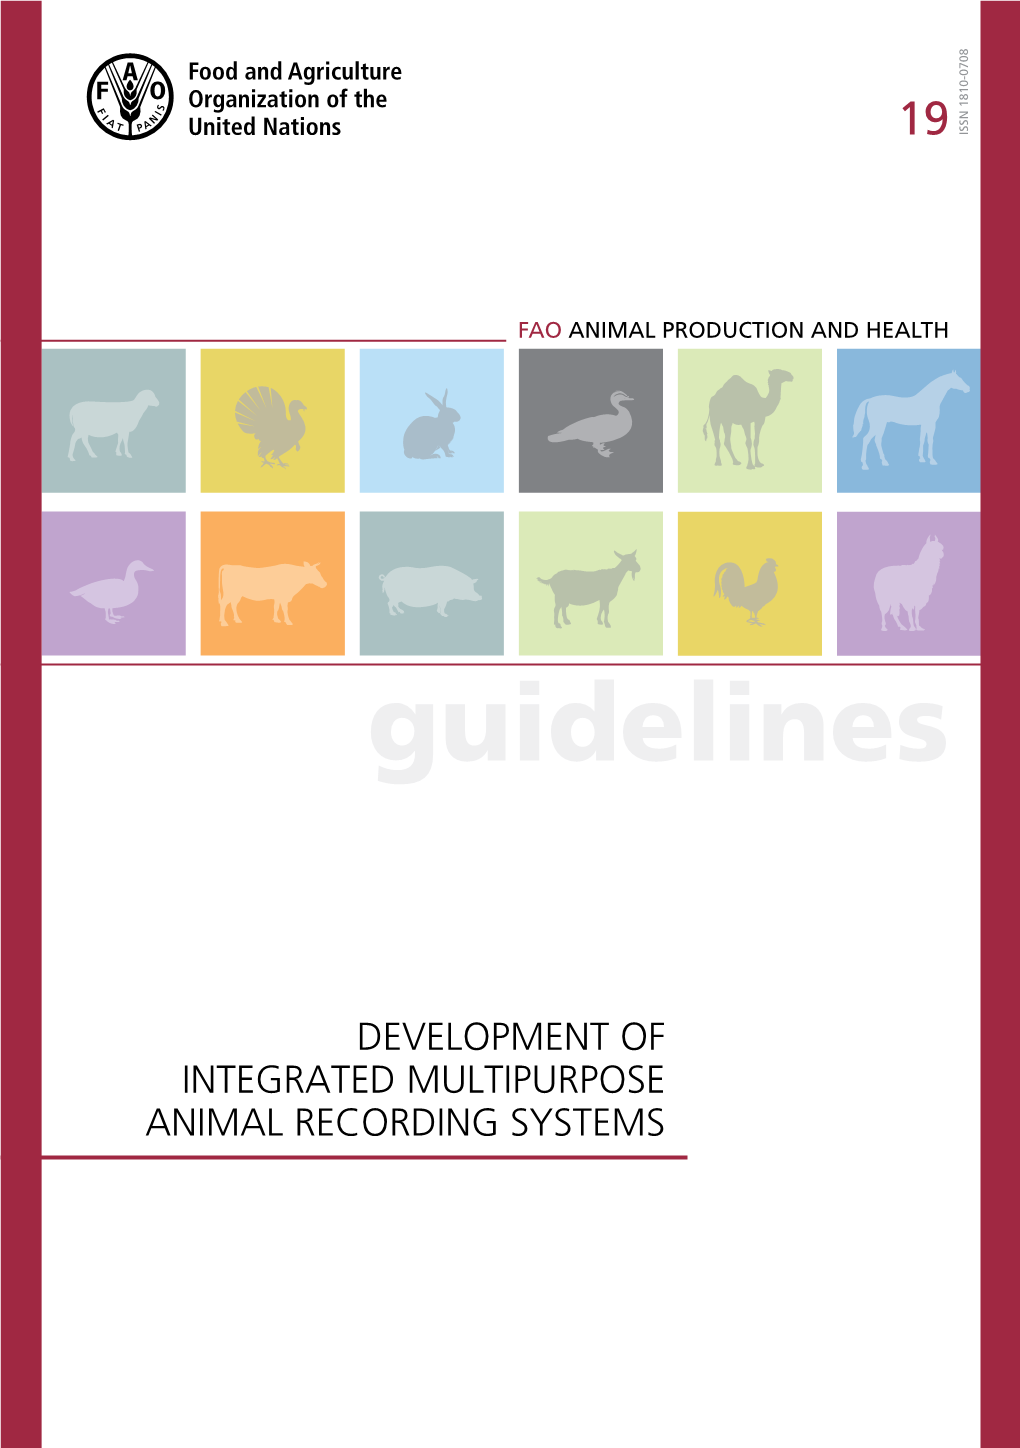 Guidelines for Development of Integrated Multipurpose Animal